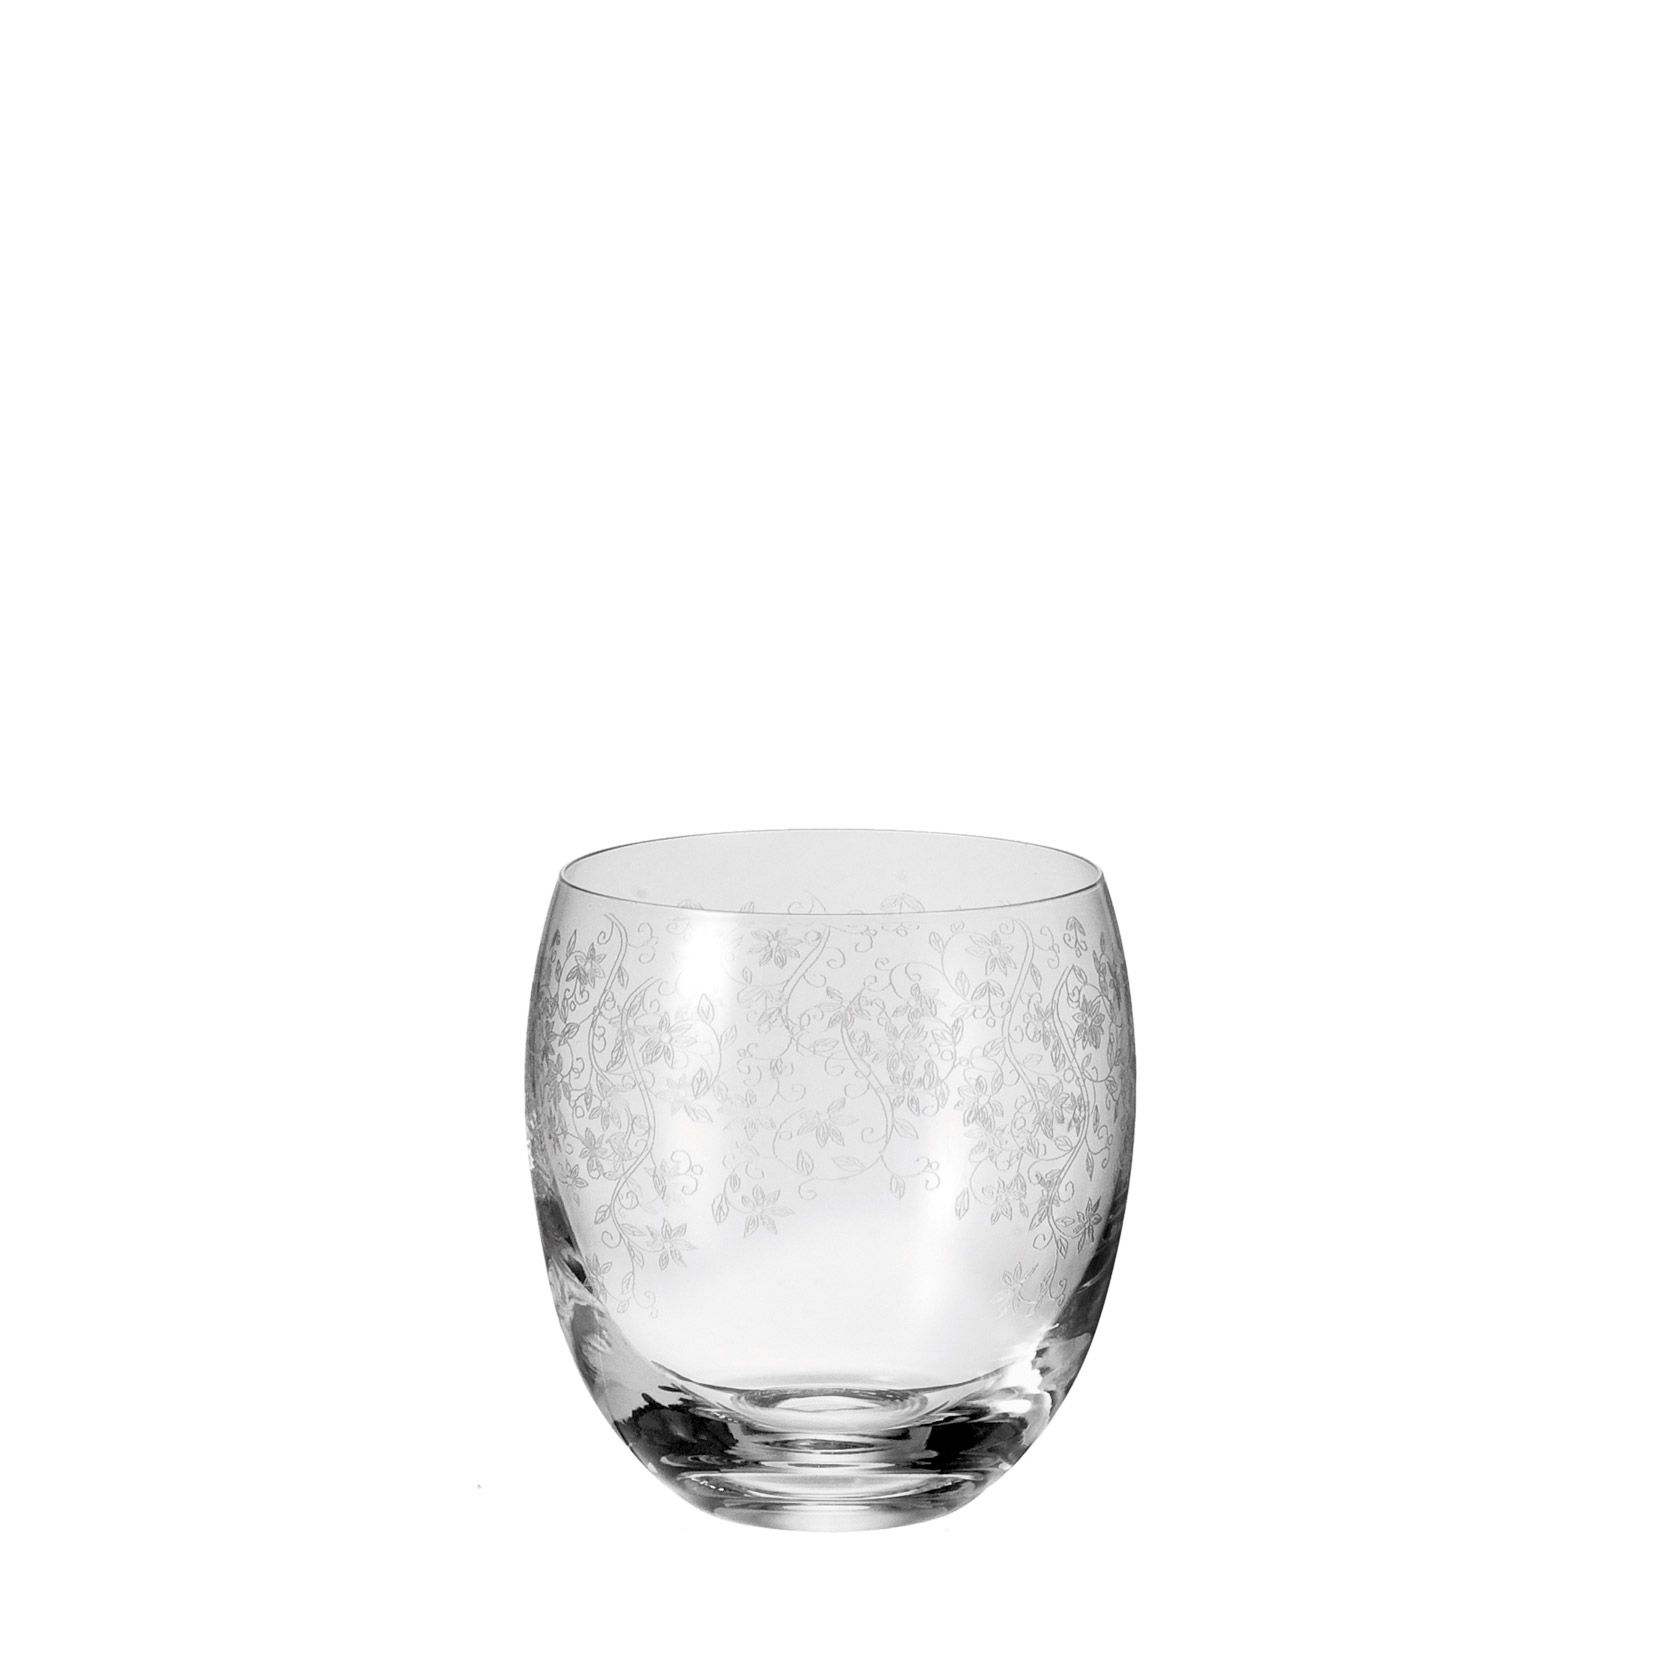 Leonardo Chateau Whiskyglas